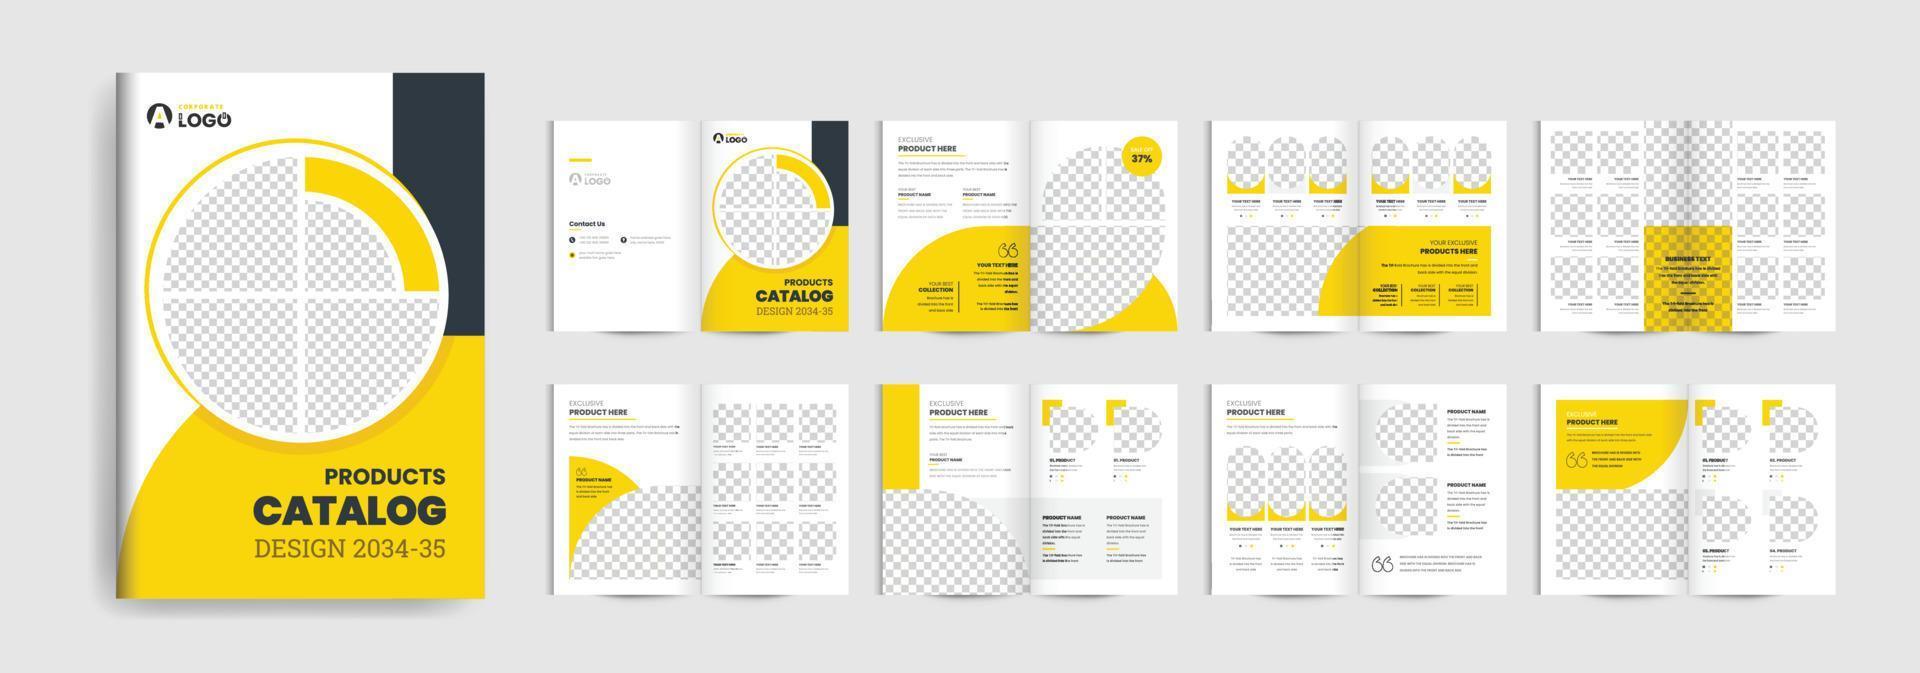 Product catalogus brochure ontwerp vector